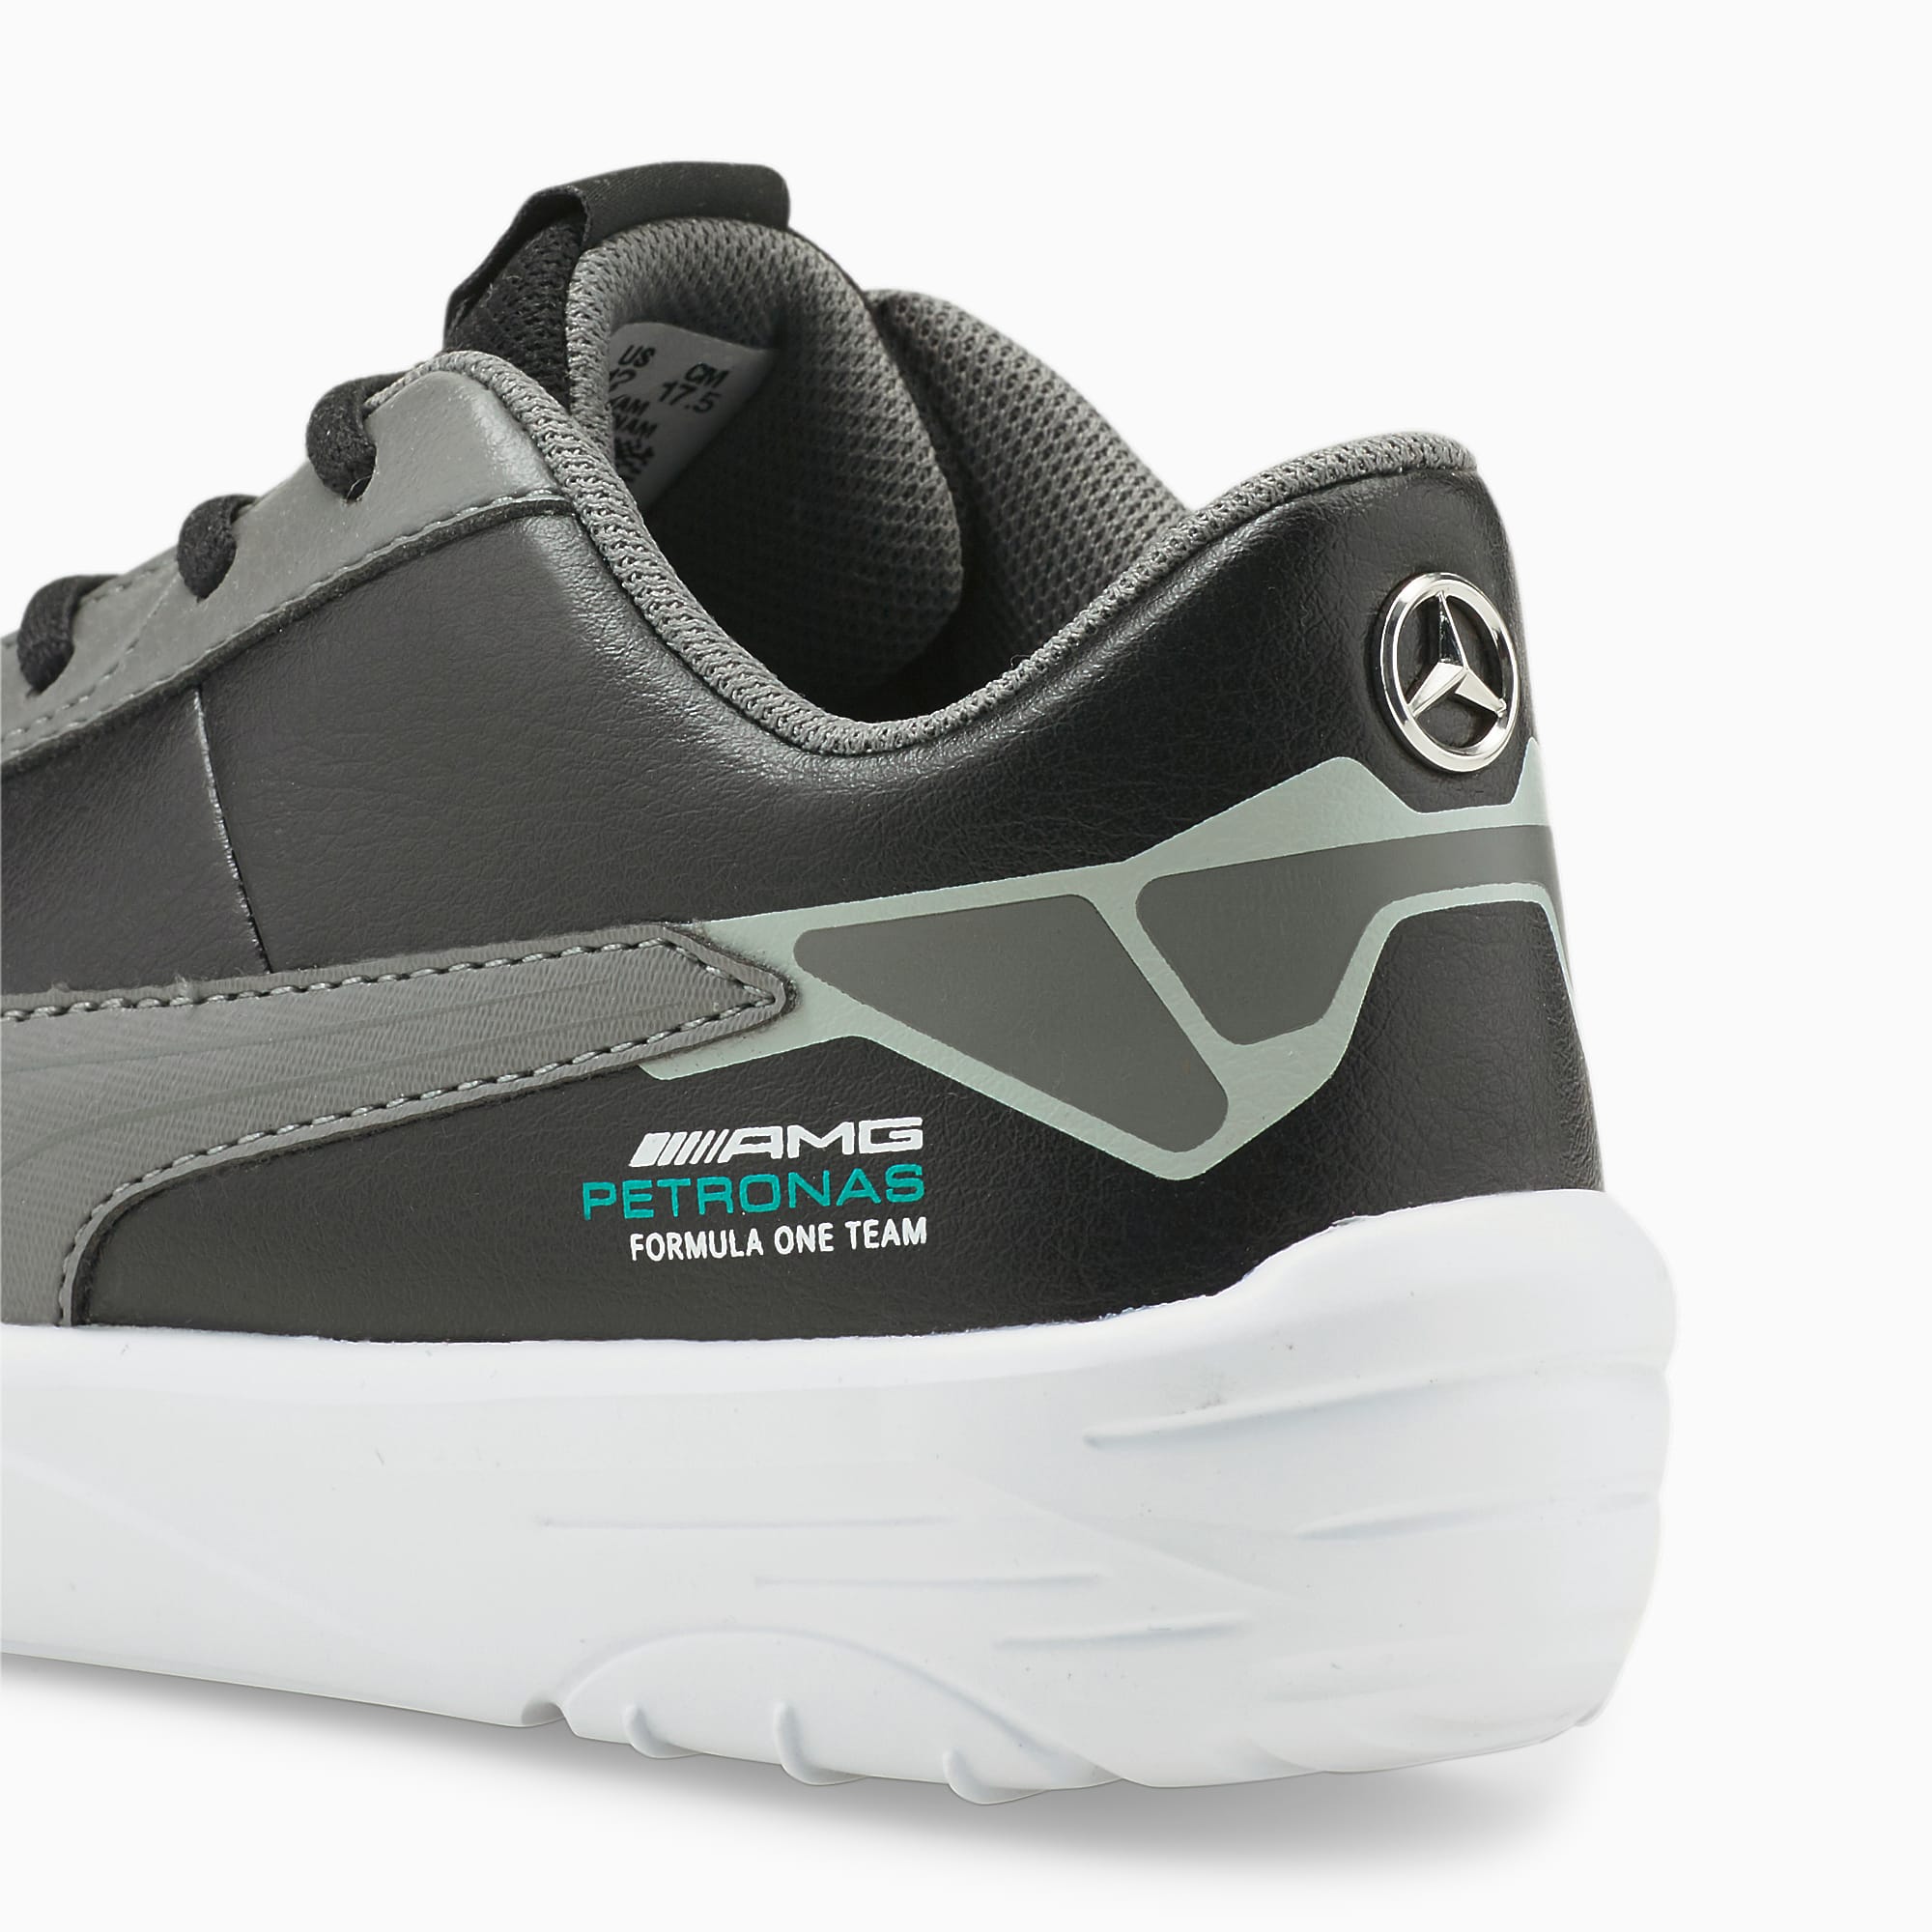  PUMA Kids Boys Mercedes F1 Drift Cat Delta Motorsport Lace Up  Sneakers Shoes Casual - Black - Size 4.5 M